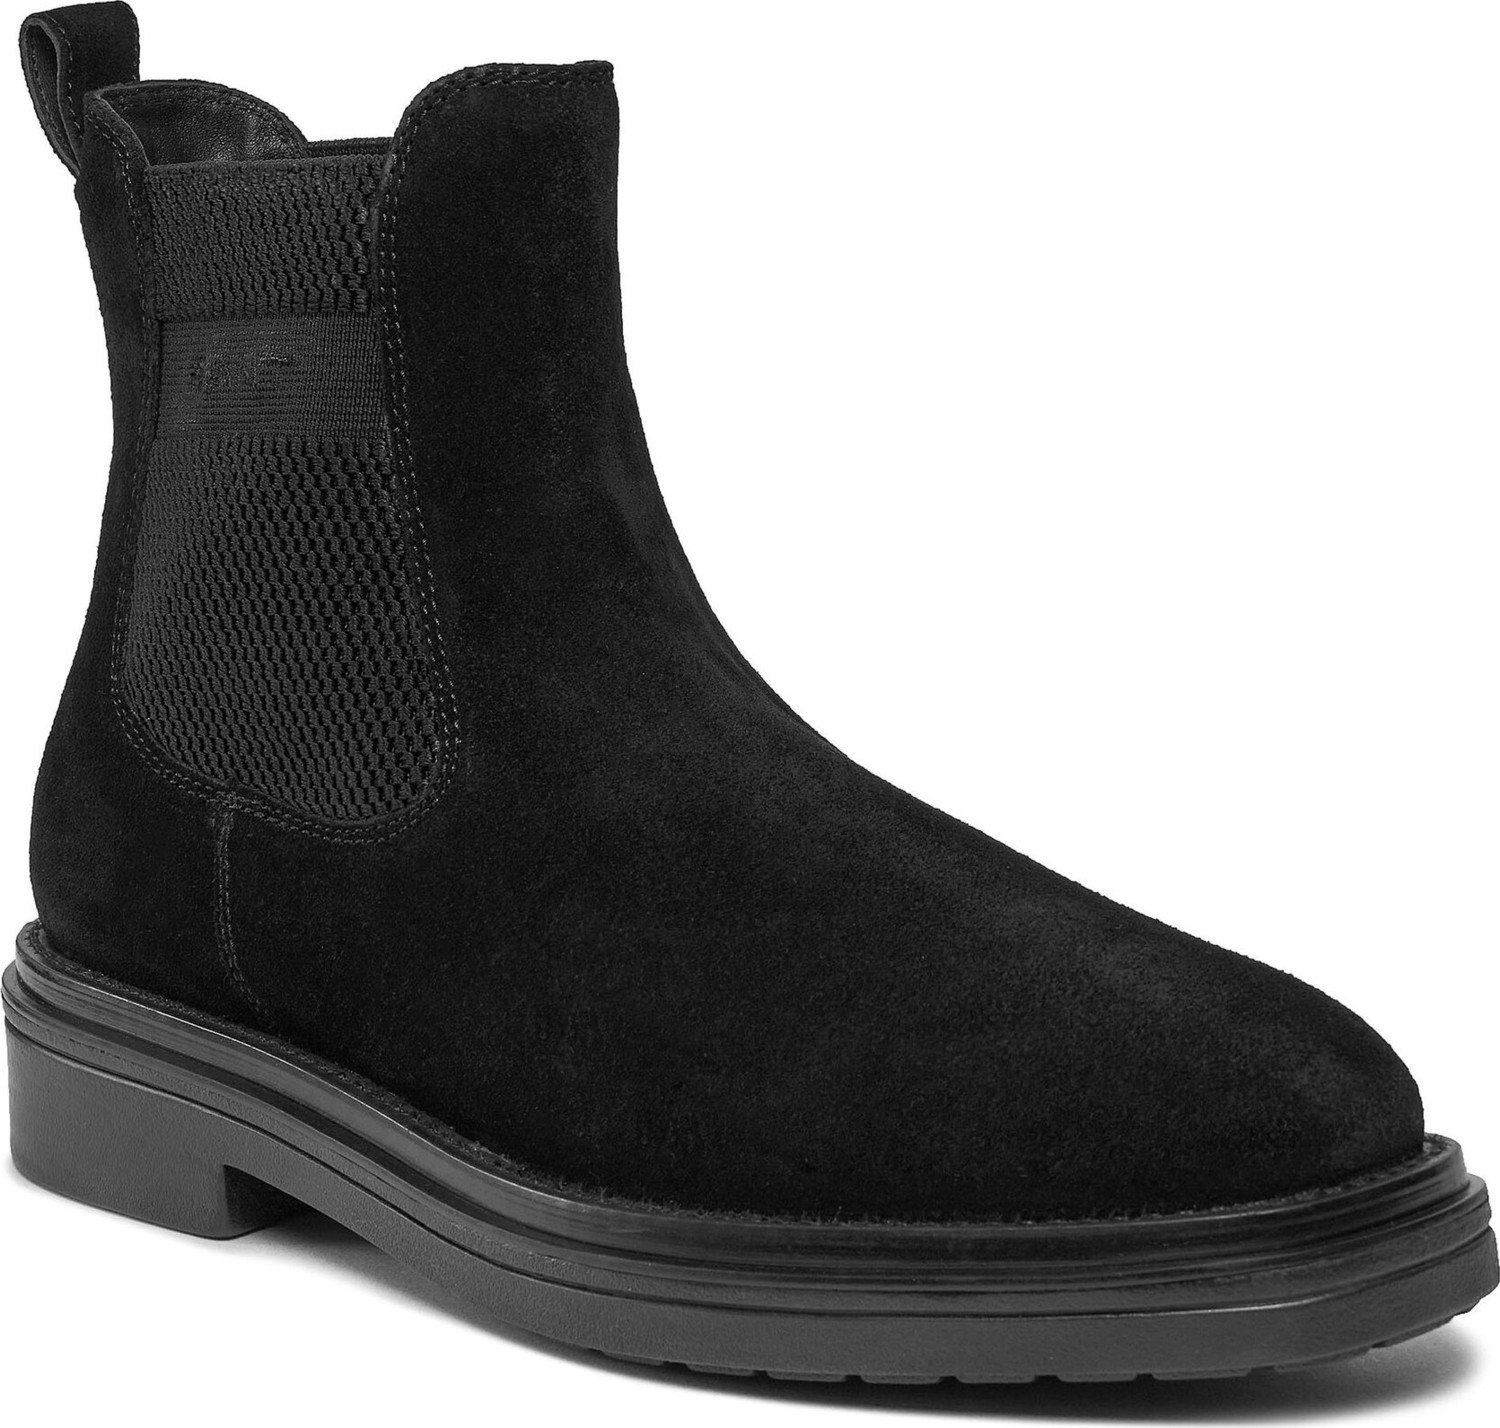 Kotníková obuv s elastickým prvkem Gant Boggar Chelsea Boot 27653331 Black